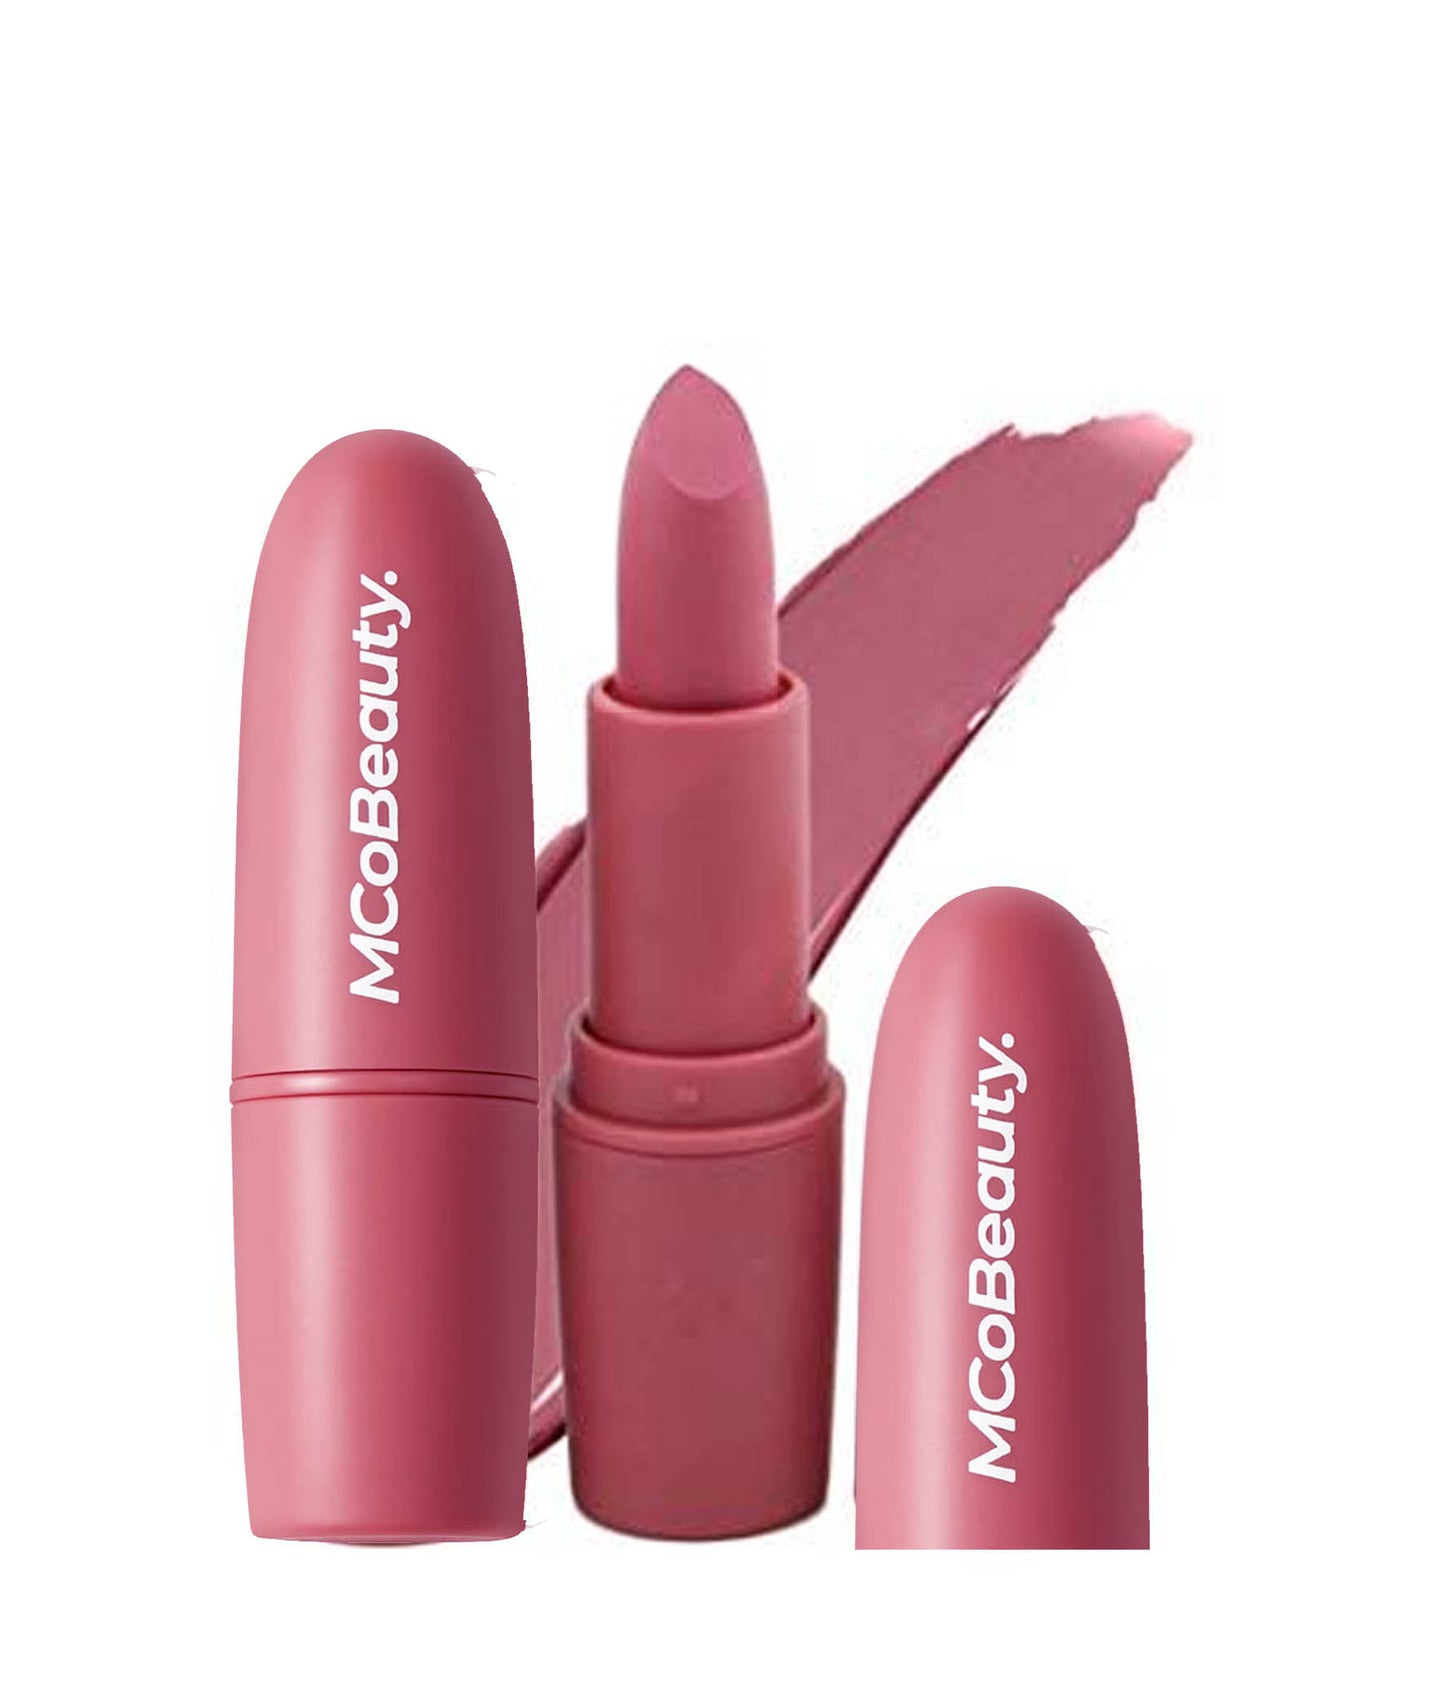 MCoBeauty Long Lasting Ultra-Creamy Formula Lipstick Pink PETAL Hydrating Formula